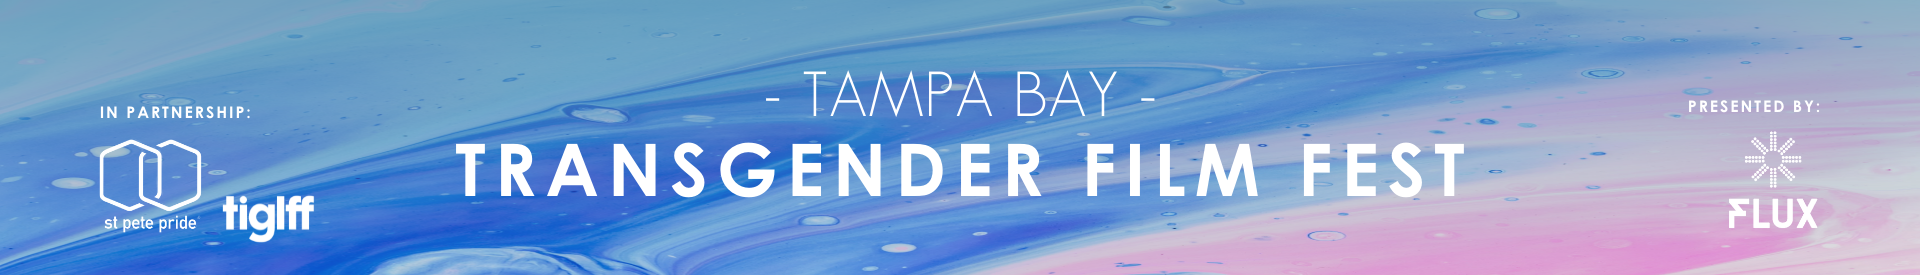 Tampa Bay Transgender Film Festival